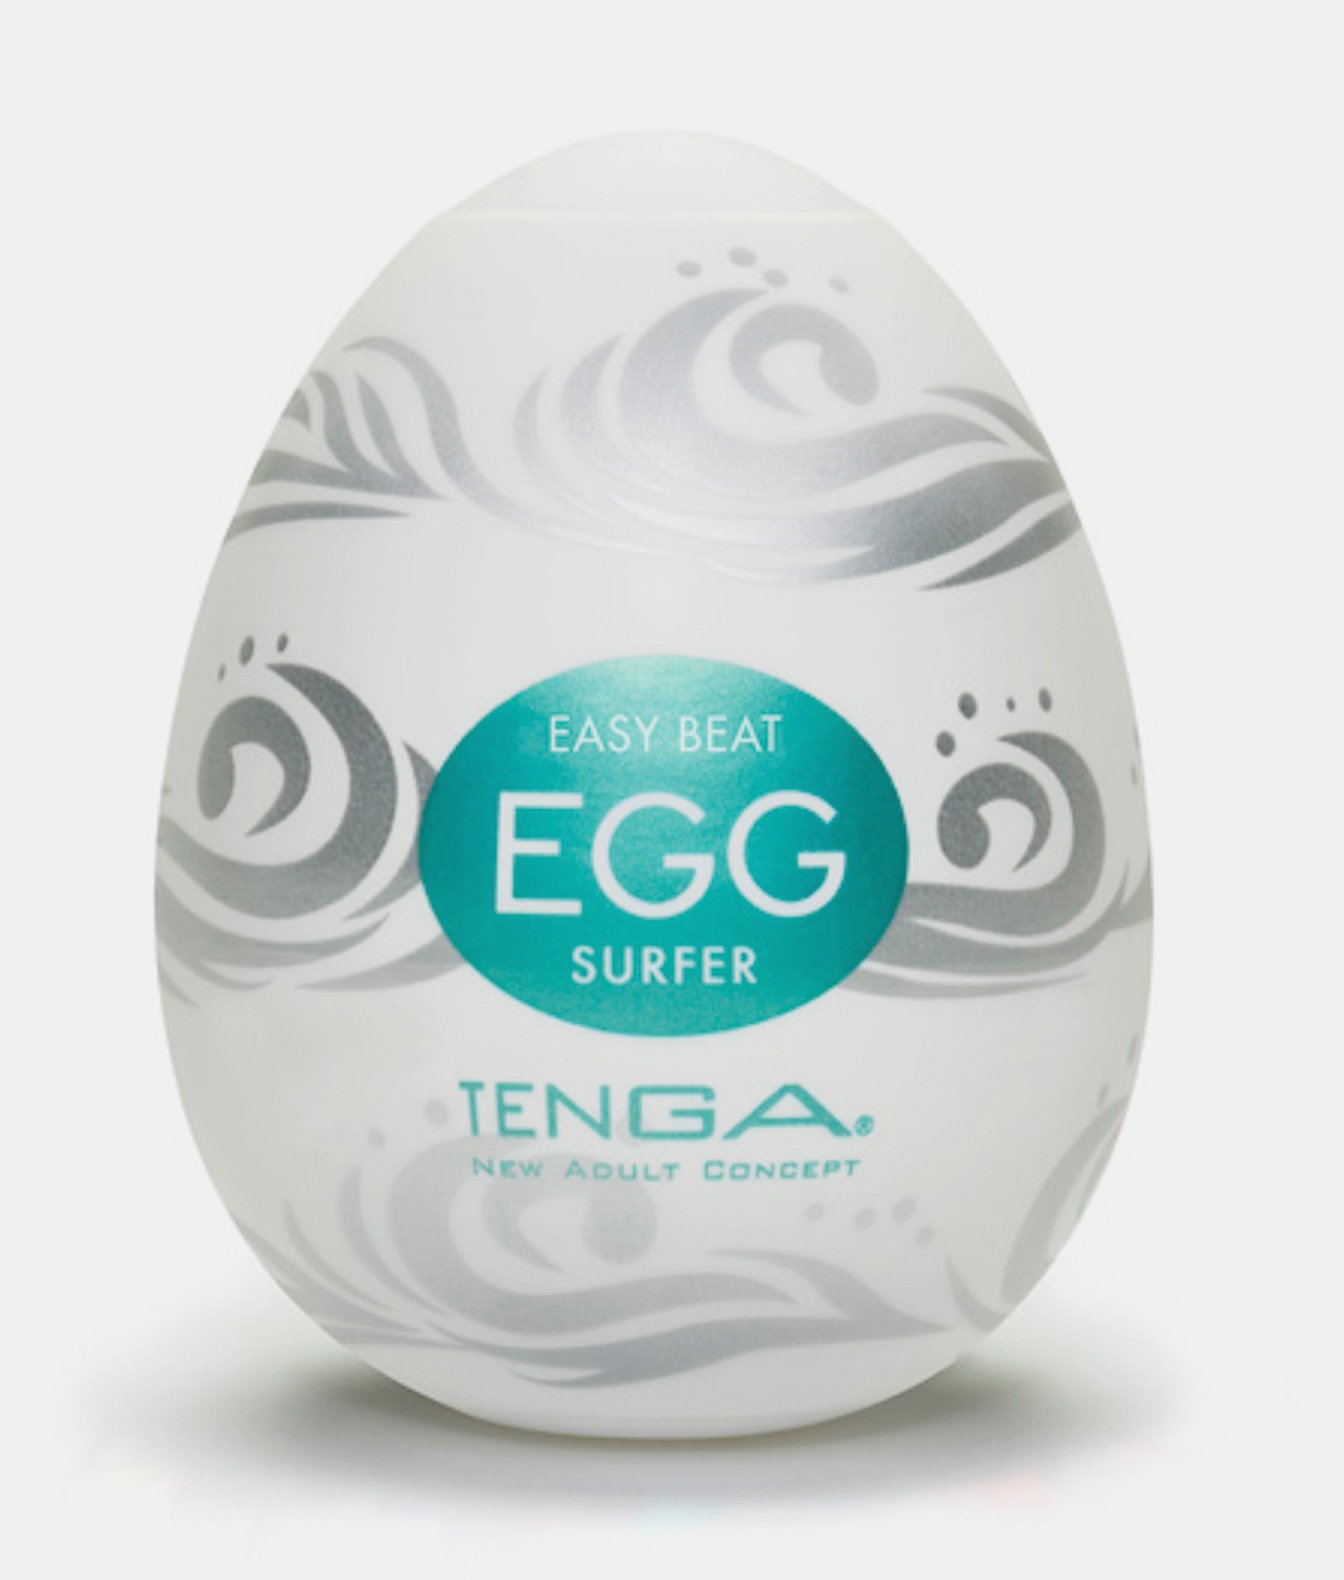 Tenga Egg Surfer 6 masturbatorów kształcie jajek